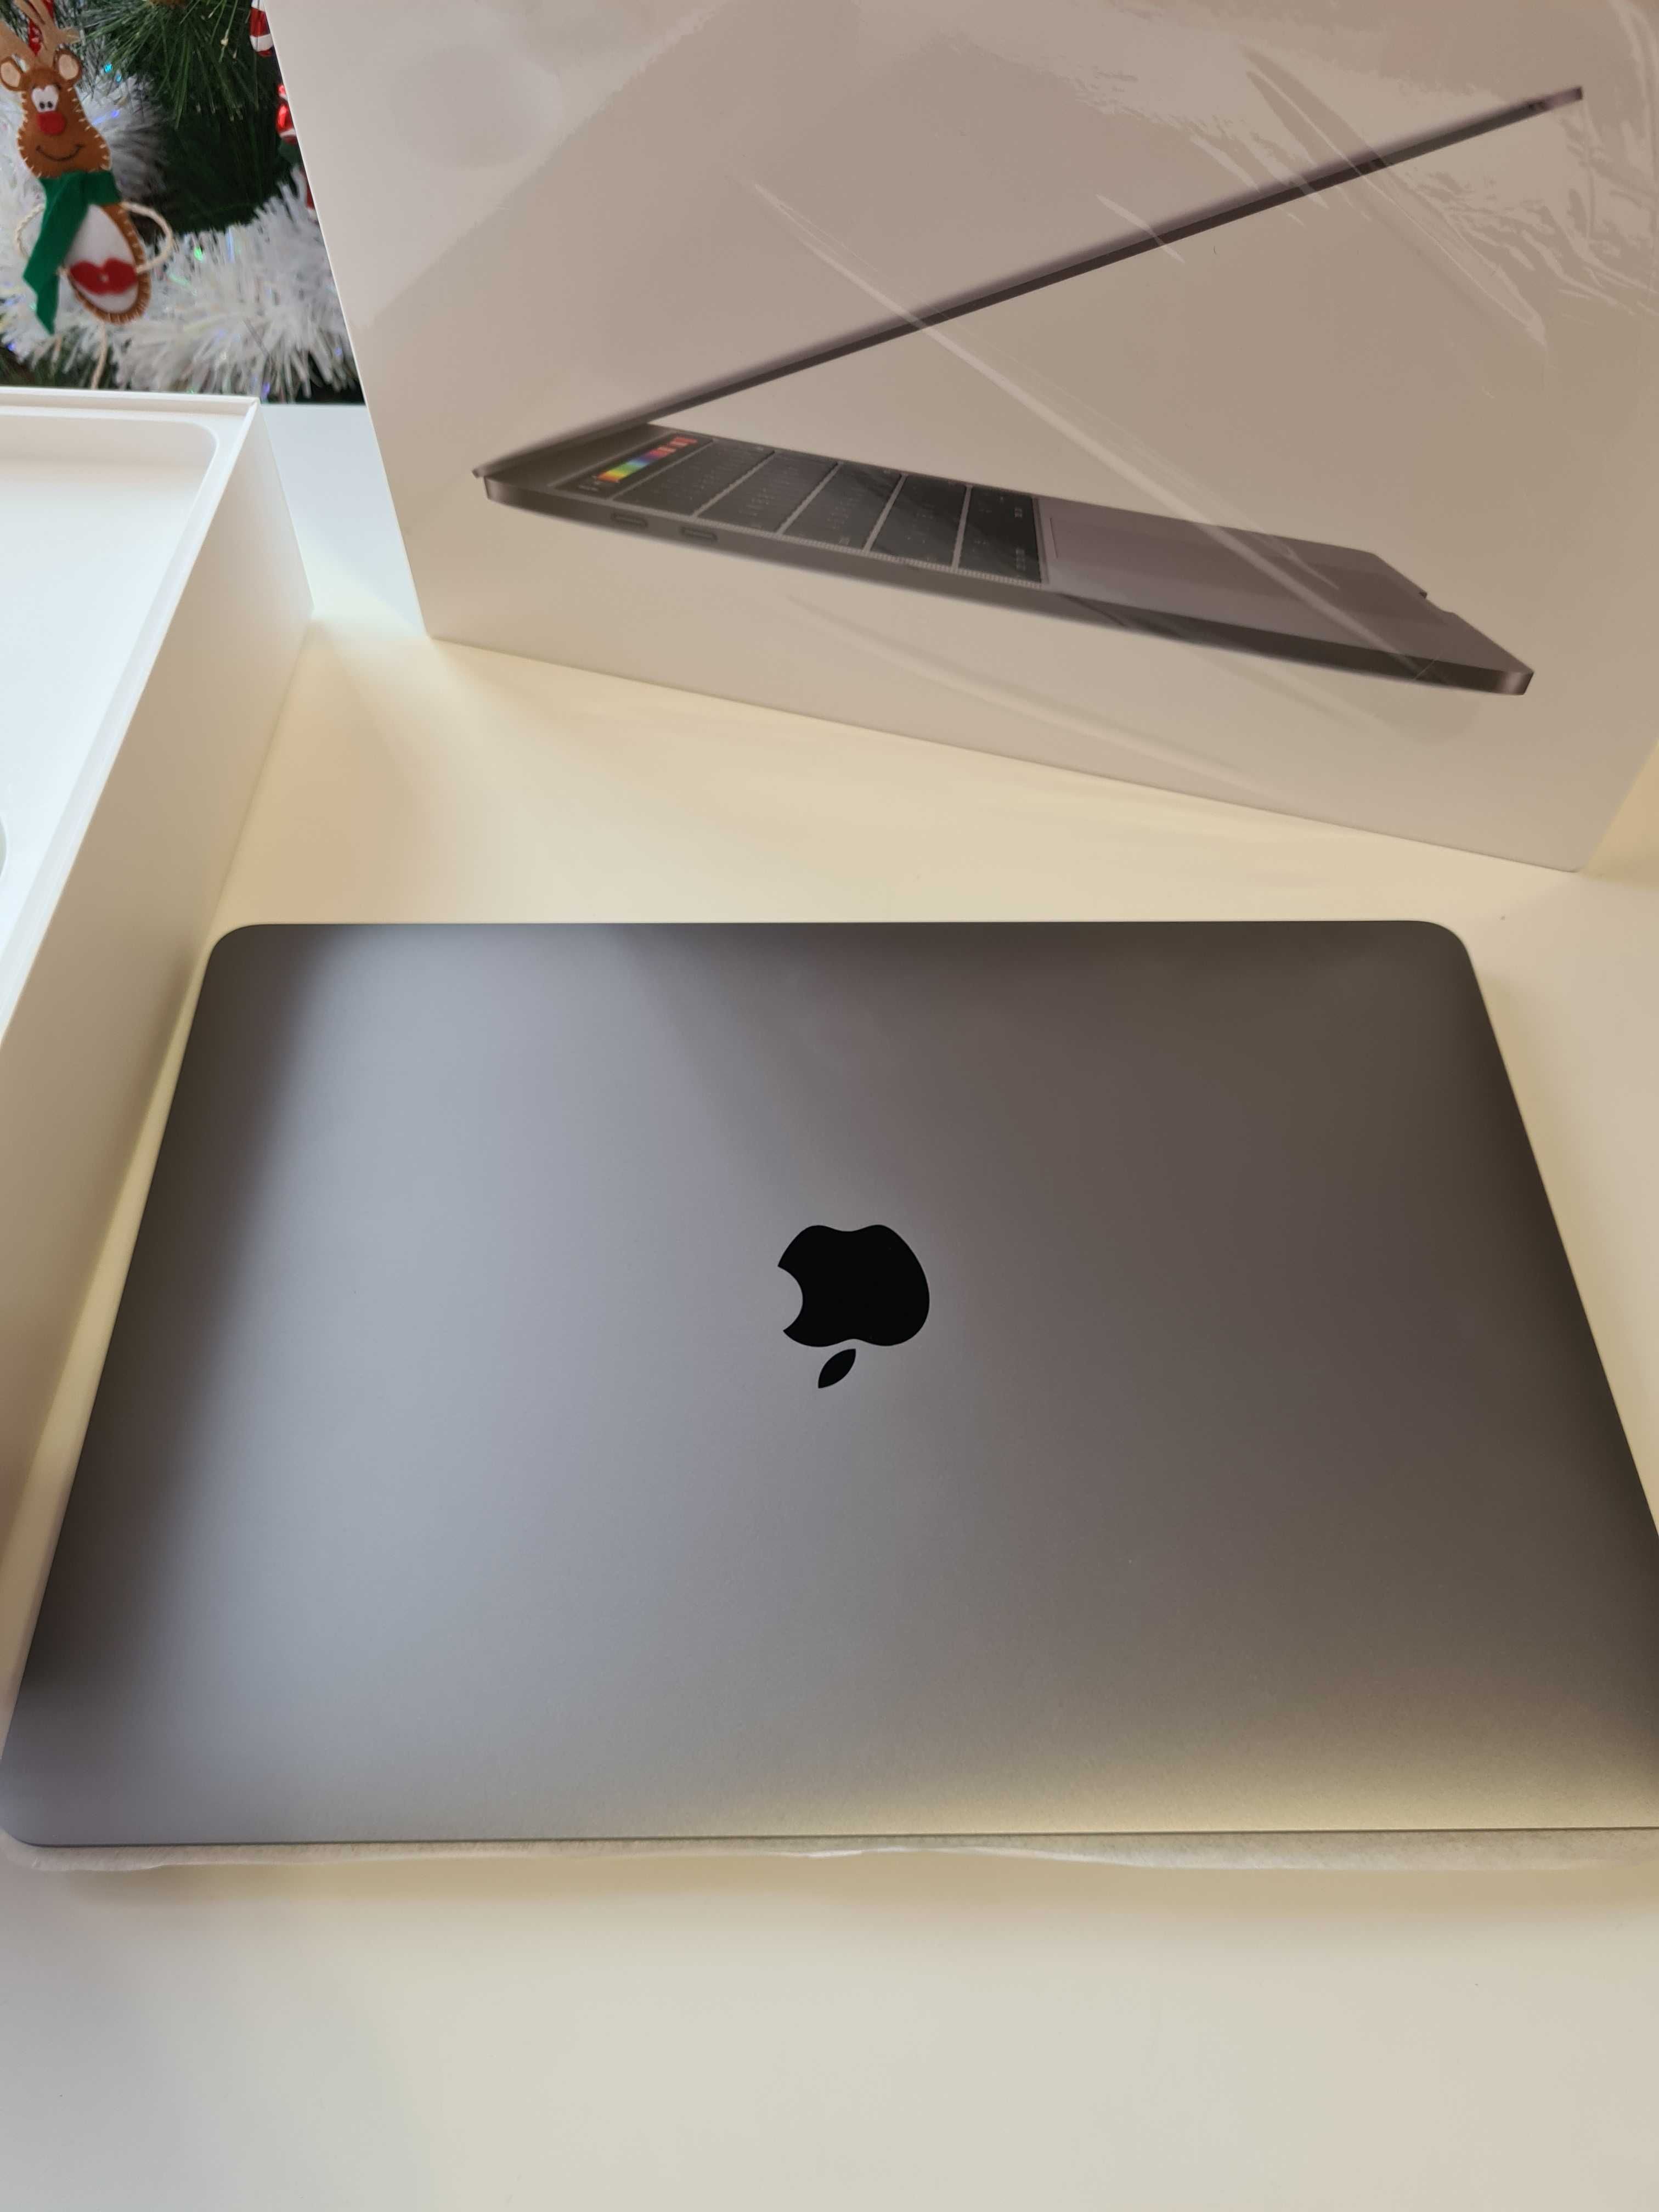 НОВ Apple Macbook PRO 13 2019 - 2020 I5 16GB 512GB SSD A1989